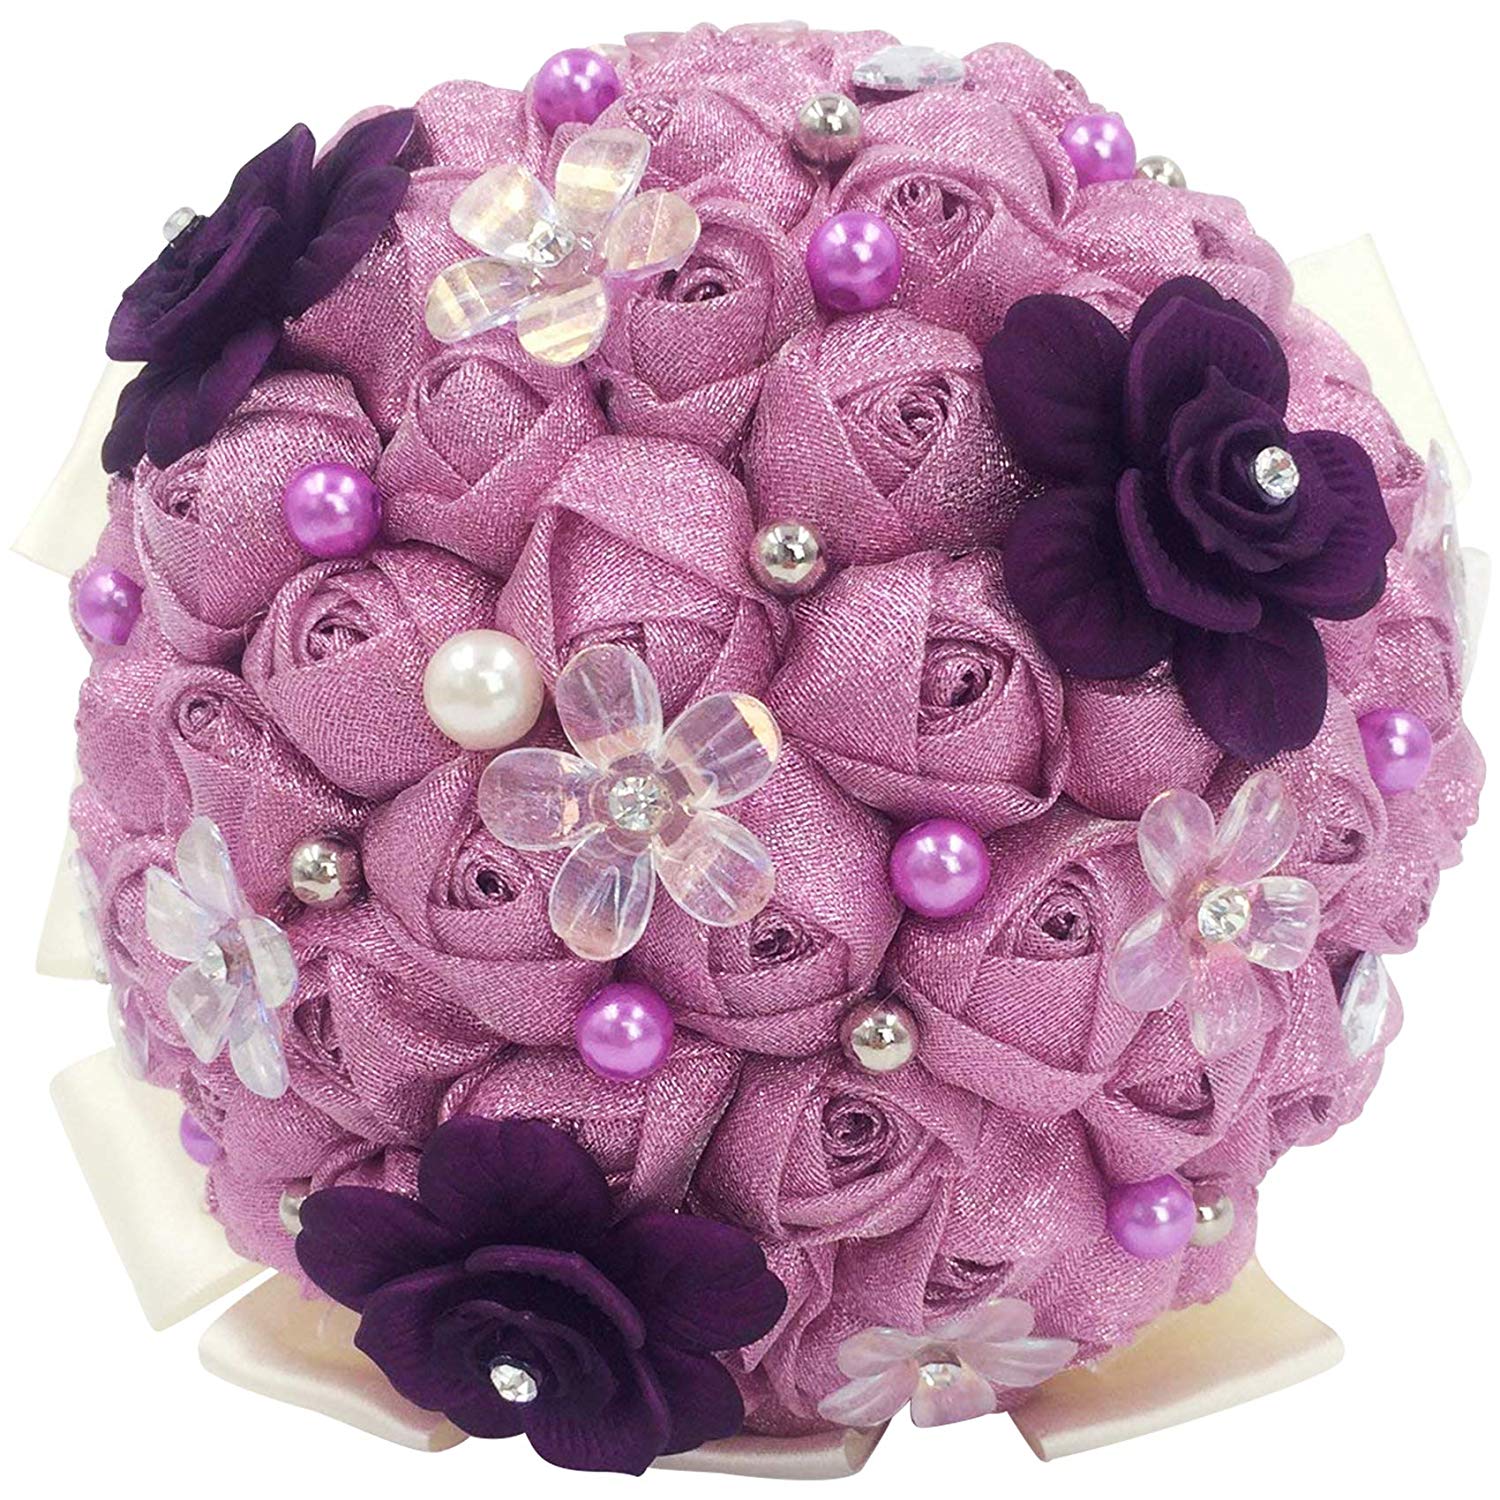 Retro Wedding Artificial Flower Bouquet Purple with Rhinestone Layered Holder